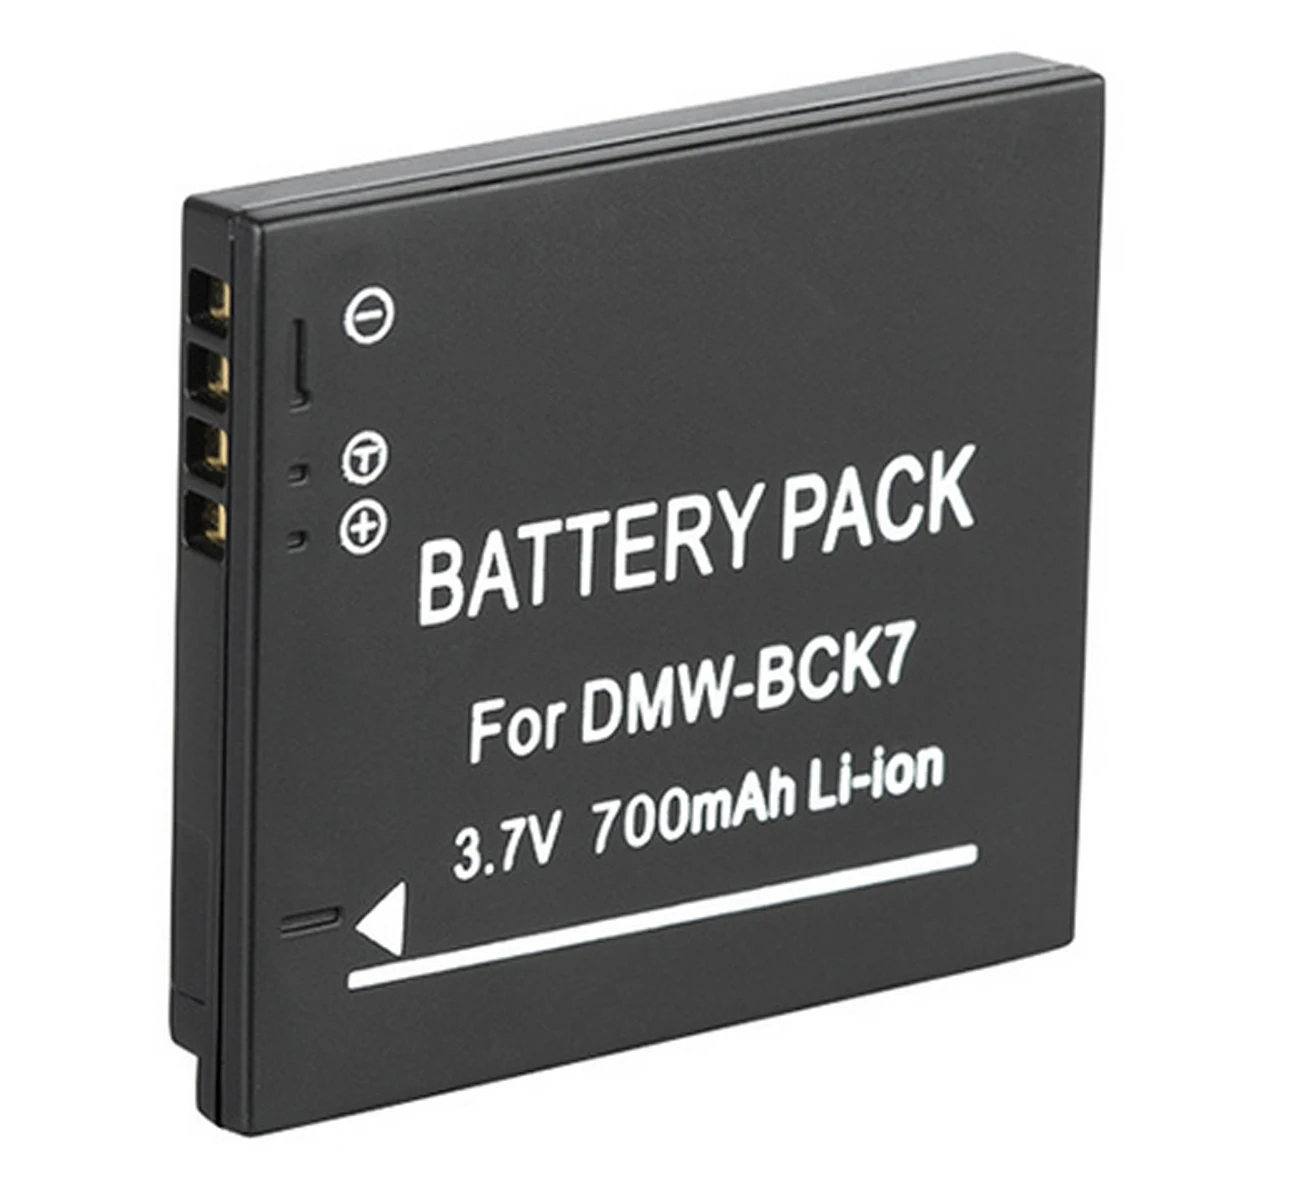 

Battery Pack for Panasonic Lumix DMC-FS16, DMC-FS18, DMC-FS22, DMC-FS28, DMC-FS35, DMC-FS37, DMC-FS40, DMC-FS45 Digital Camera